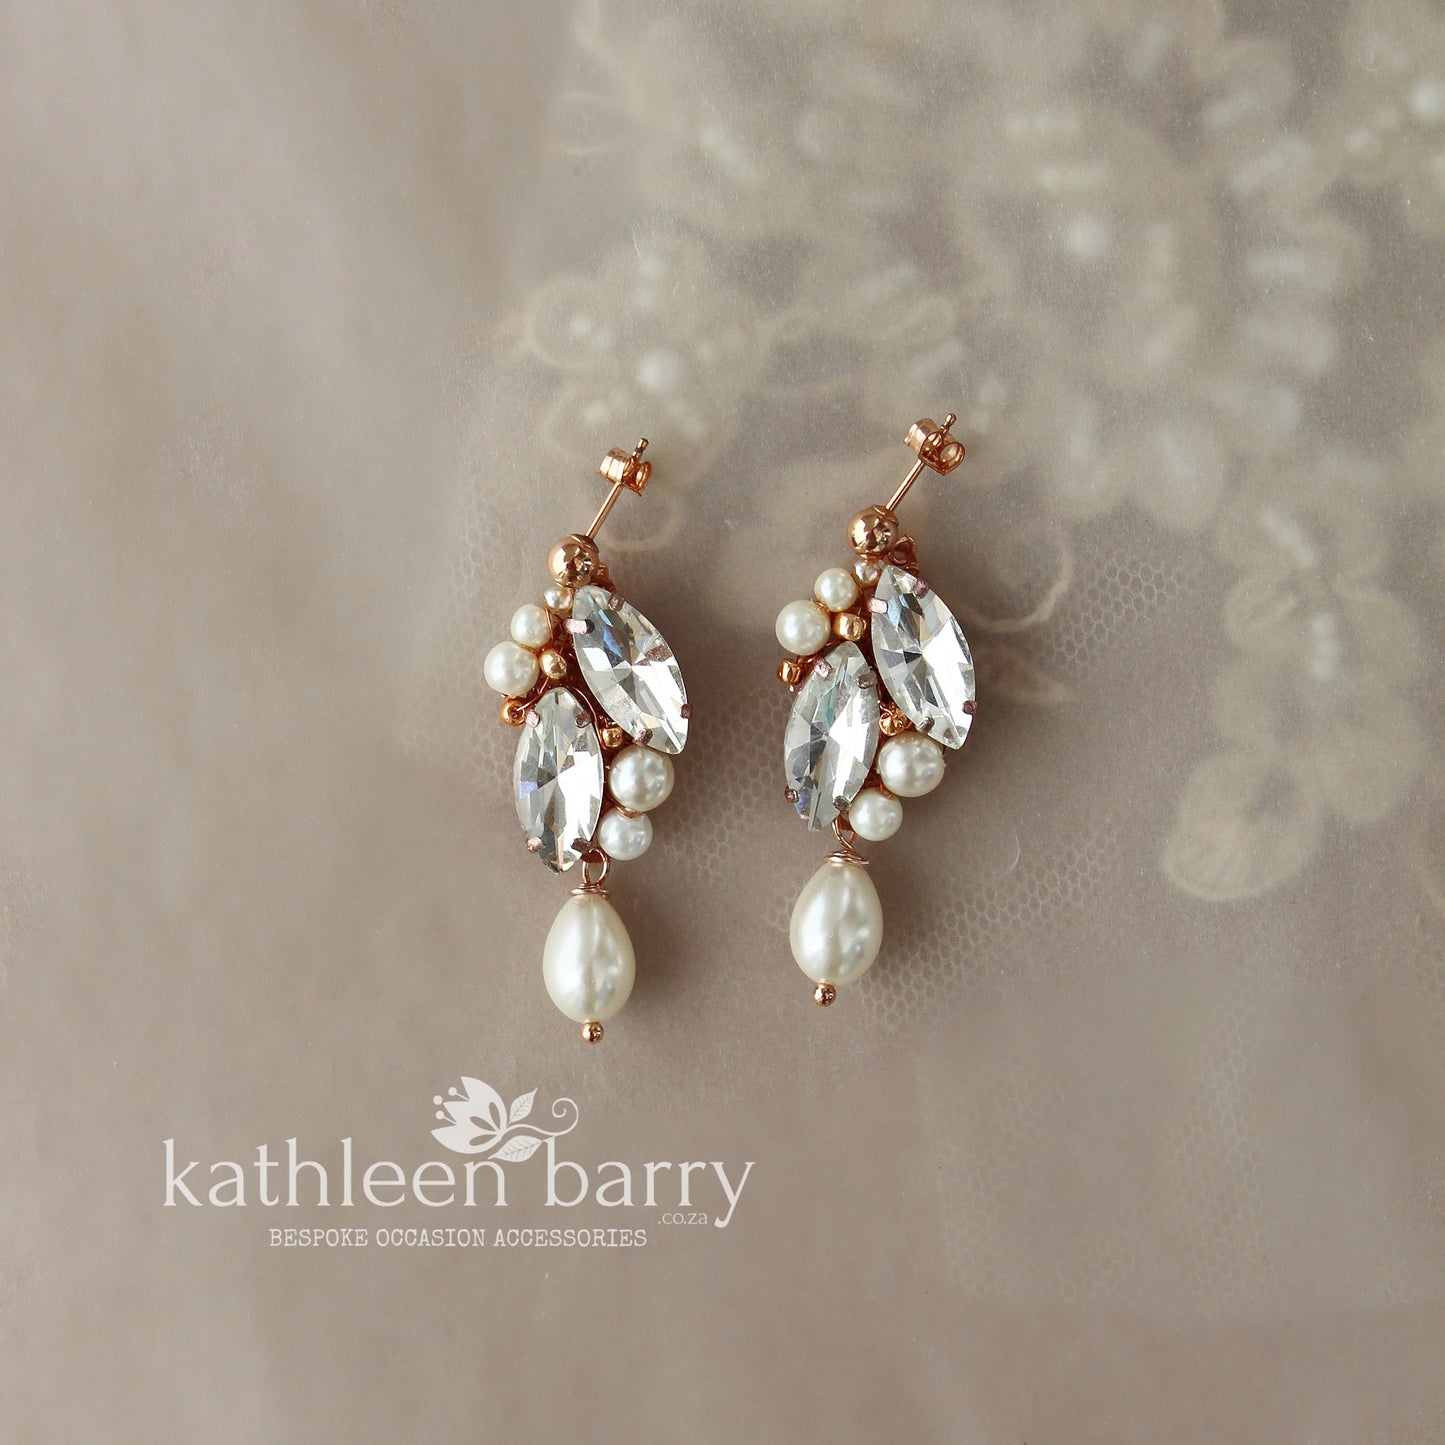 Vivienne rose gold pearl & Rhinestone chandelier earrings - Silver, gold or rose gold